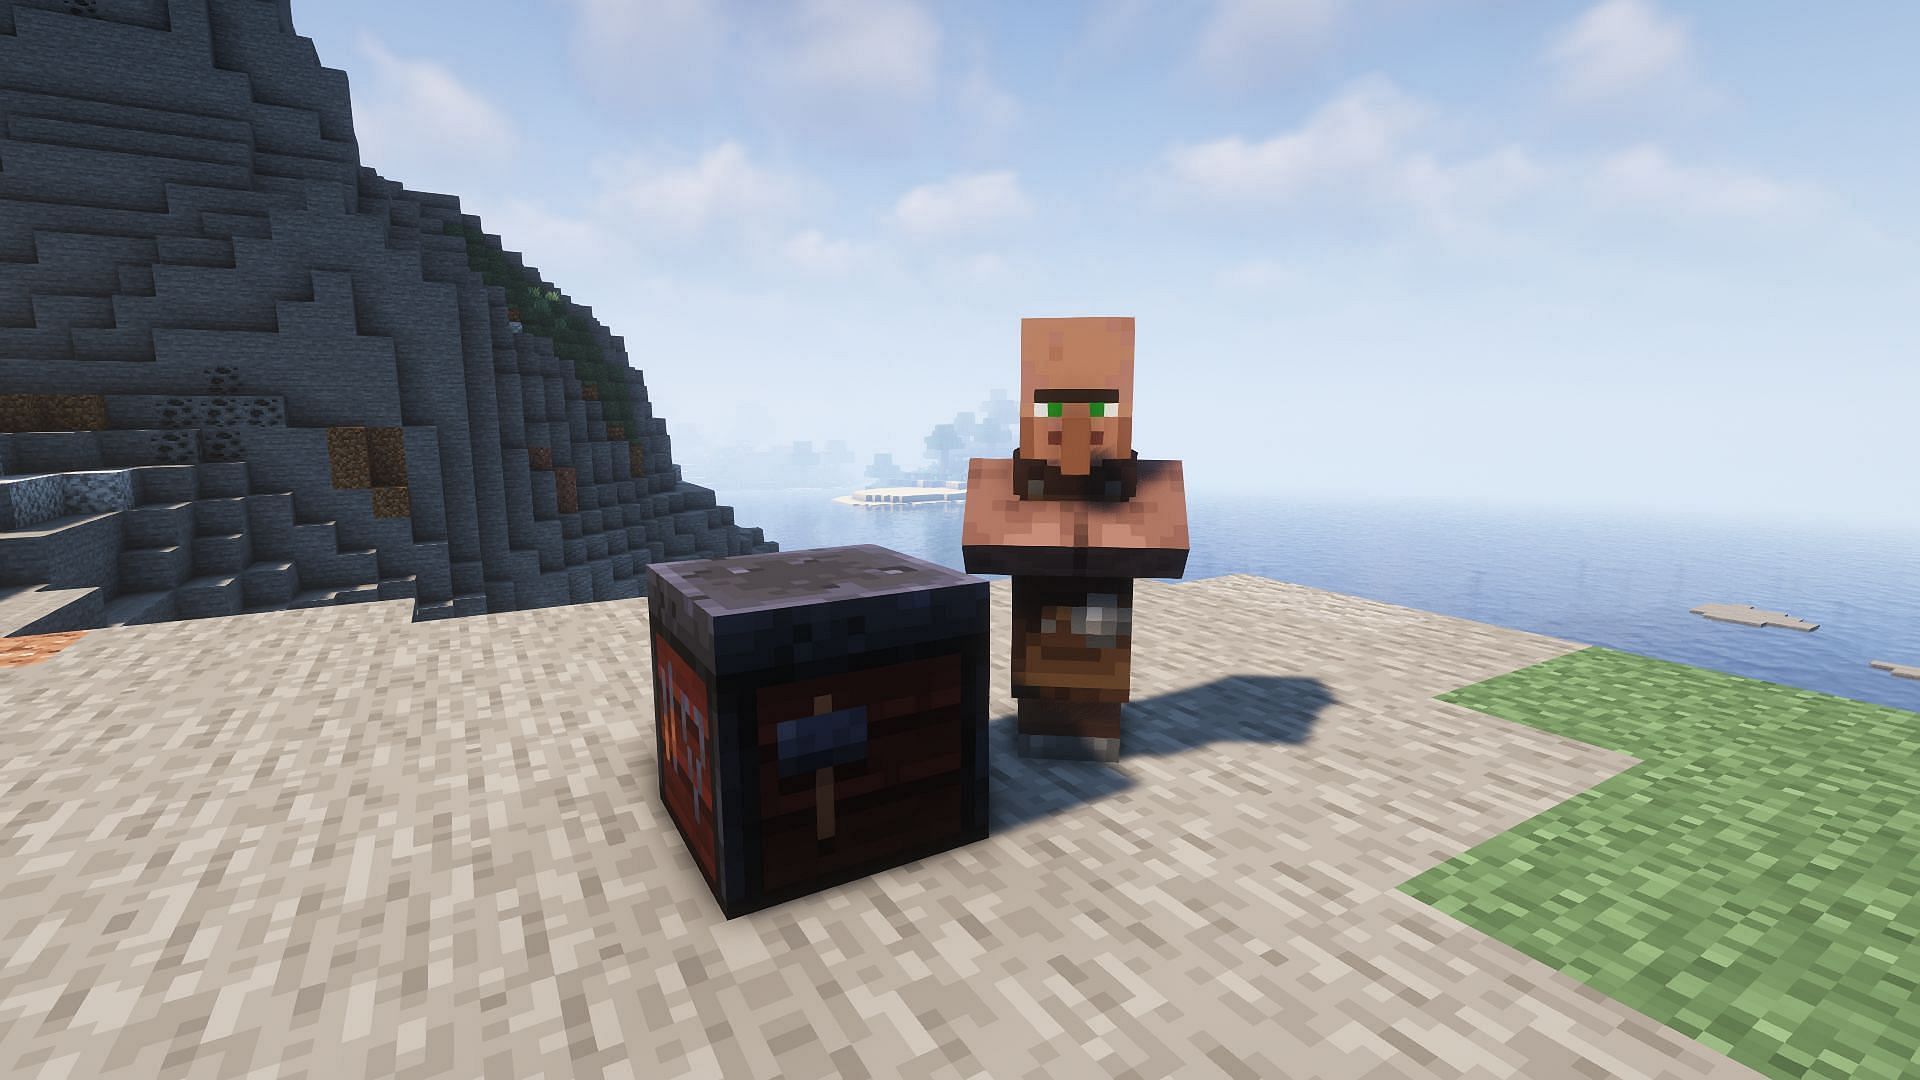 Toolsmith villager (Image via Minecraft)